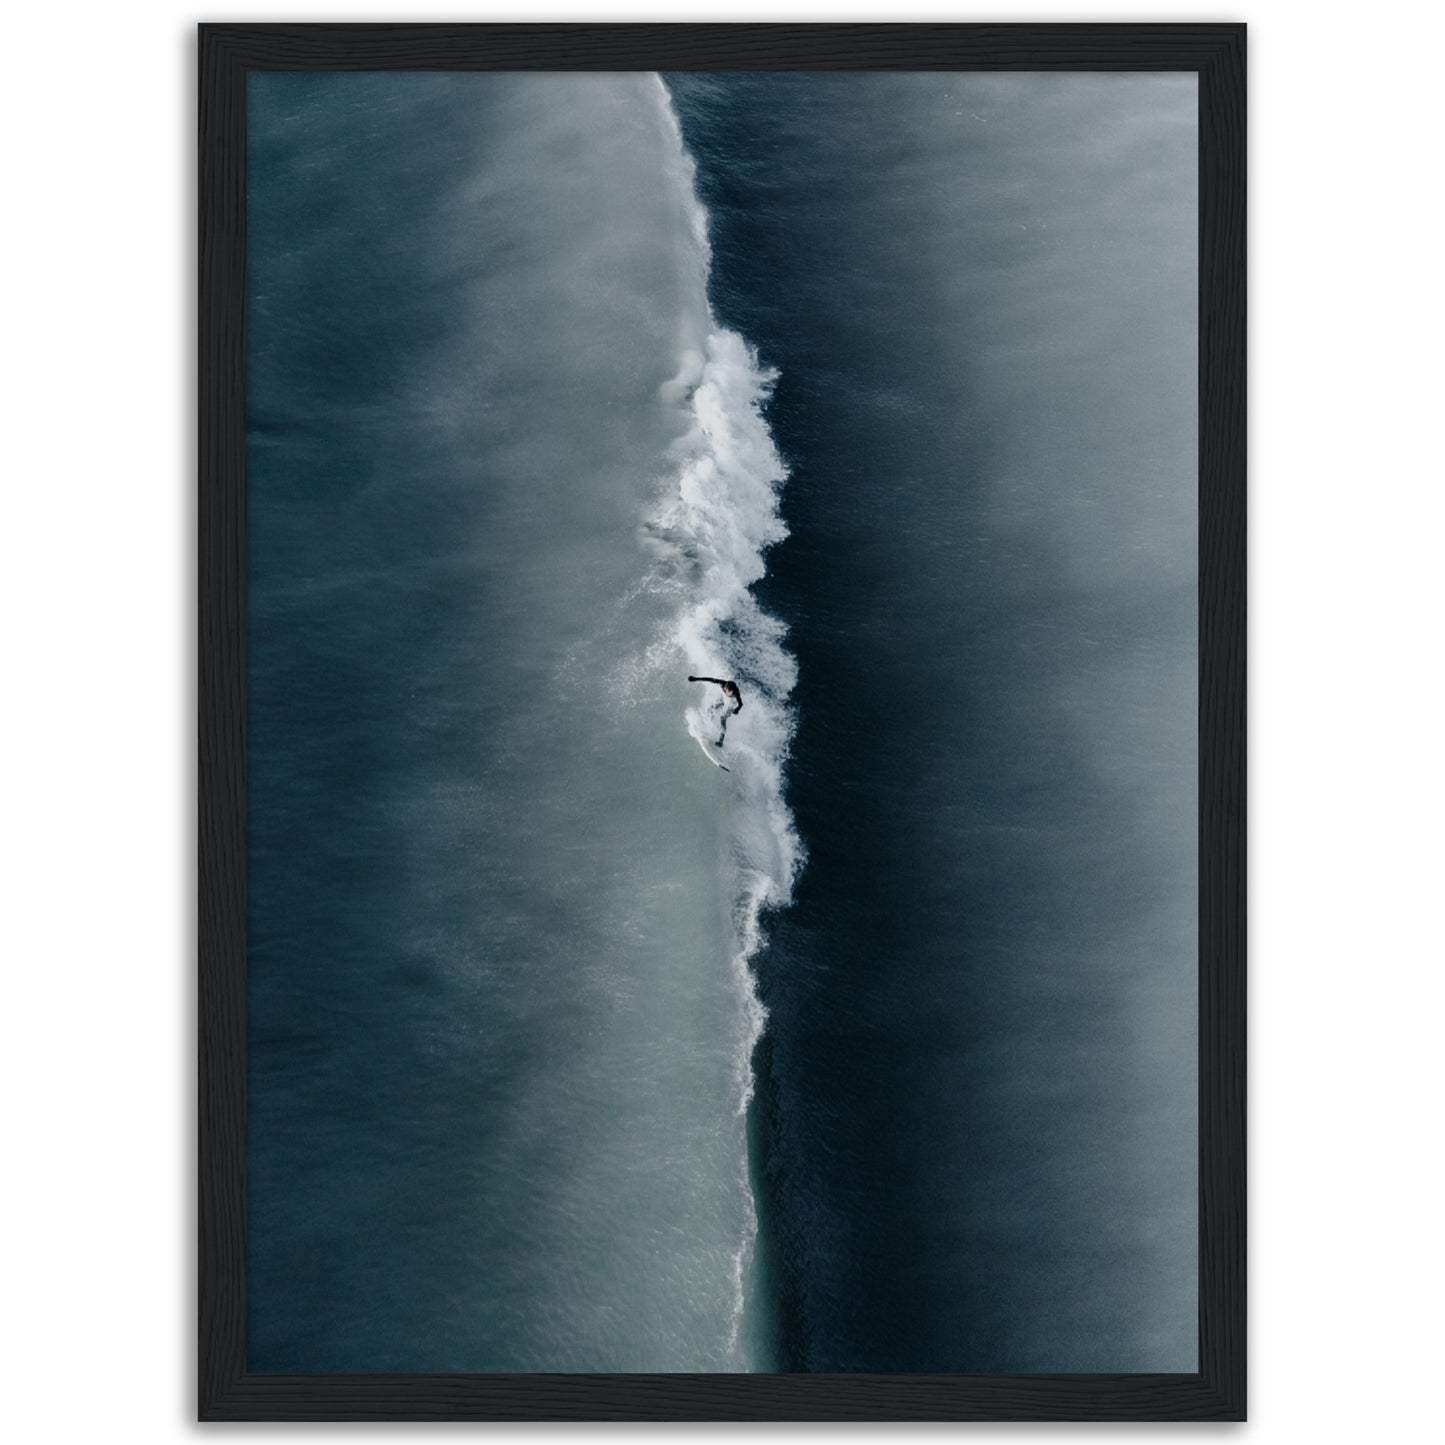 Lone Surfer Print